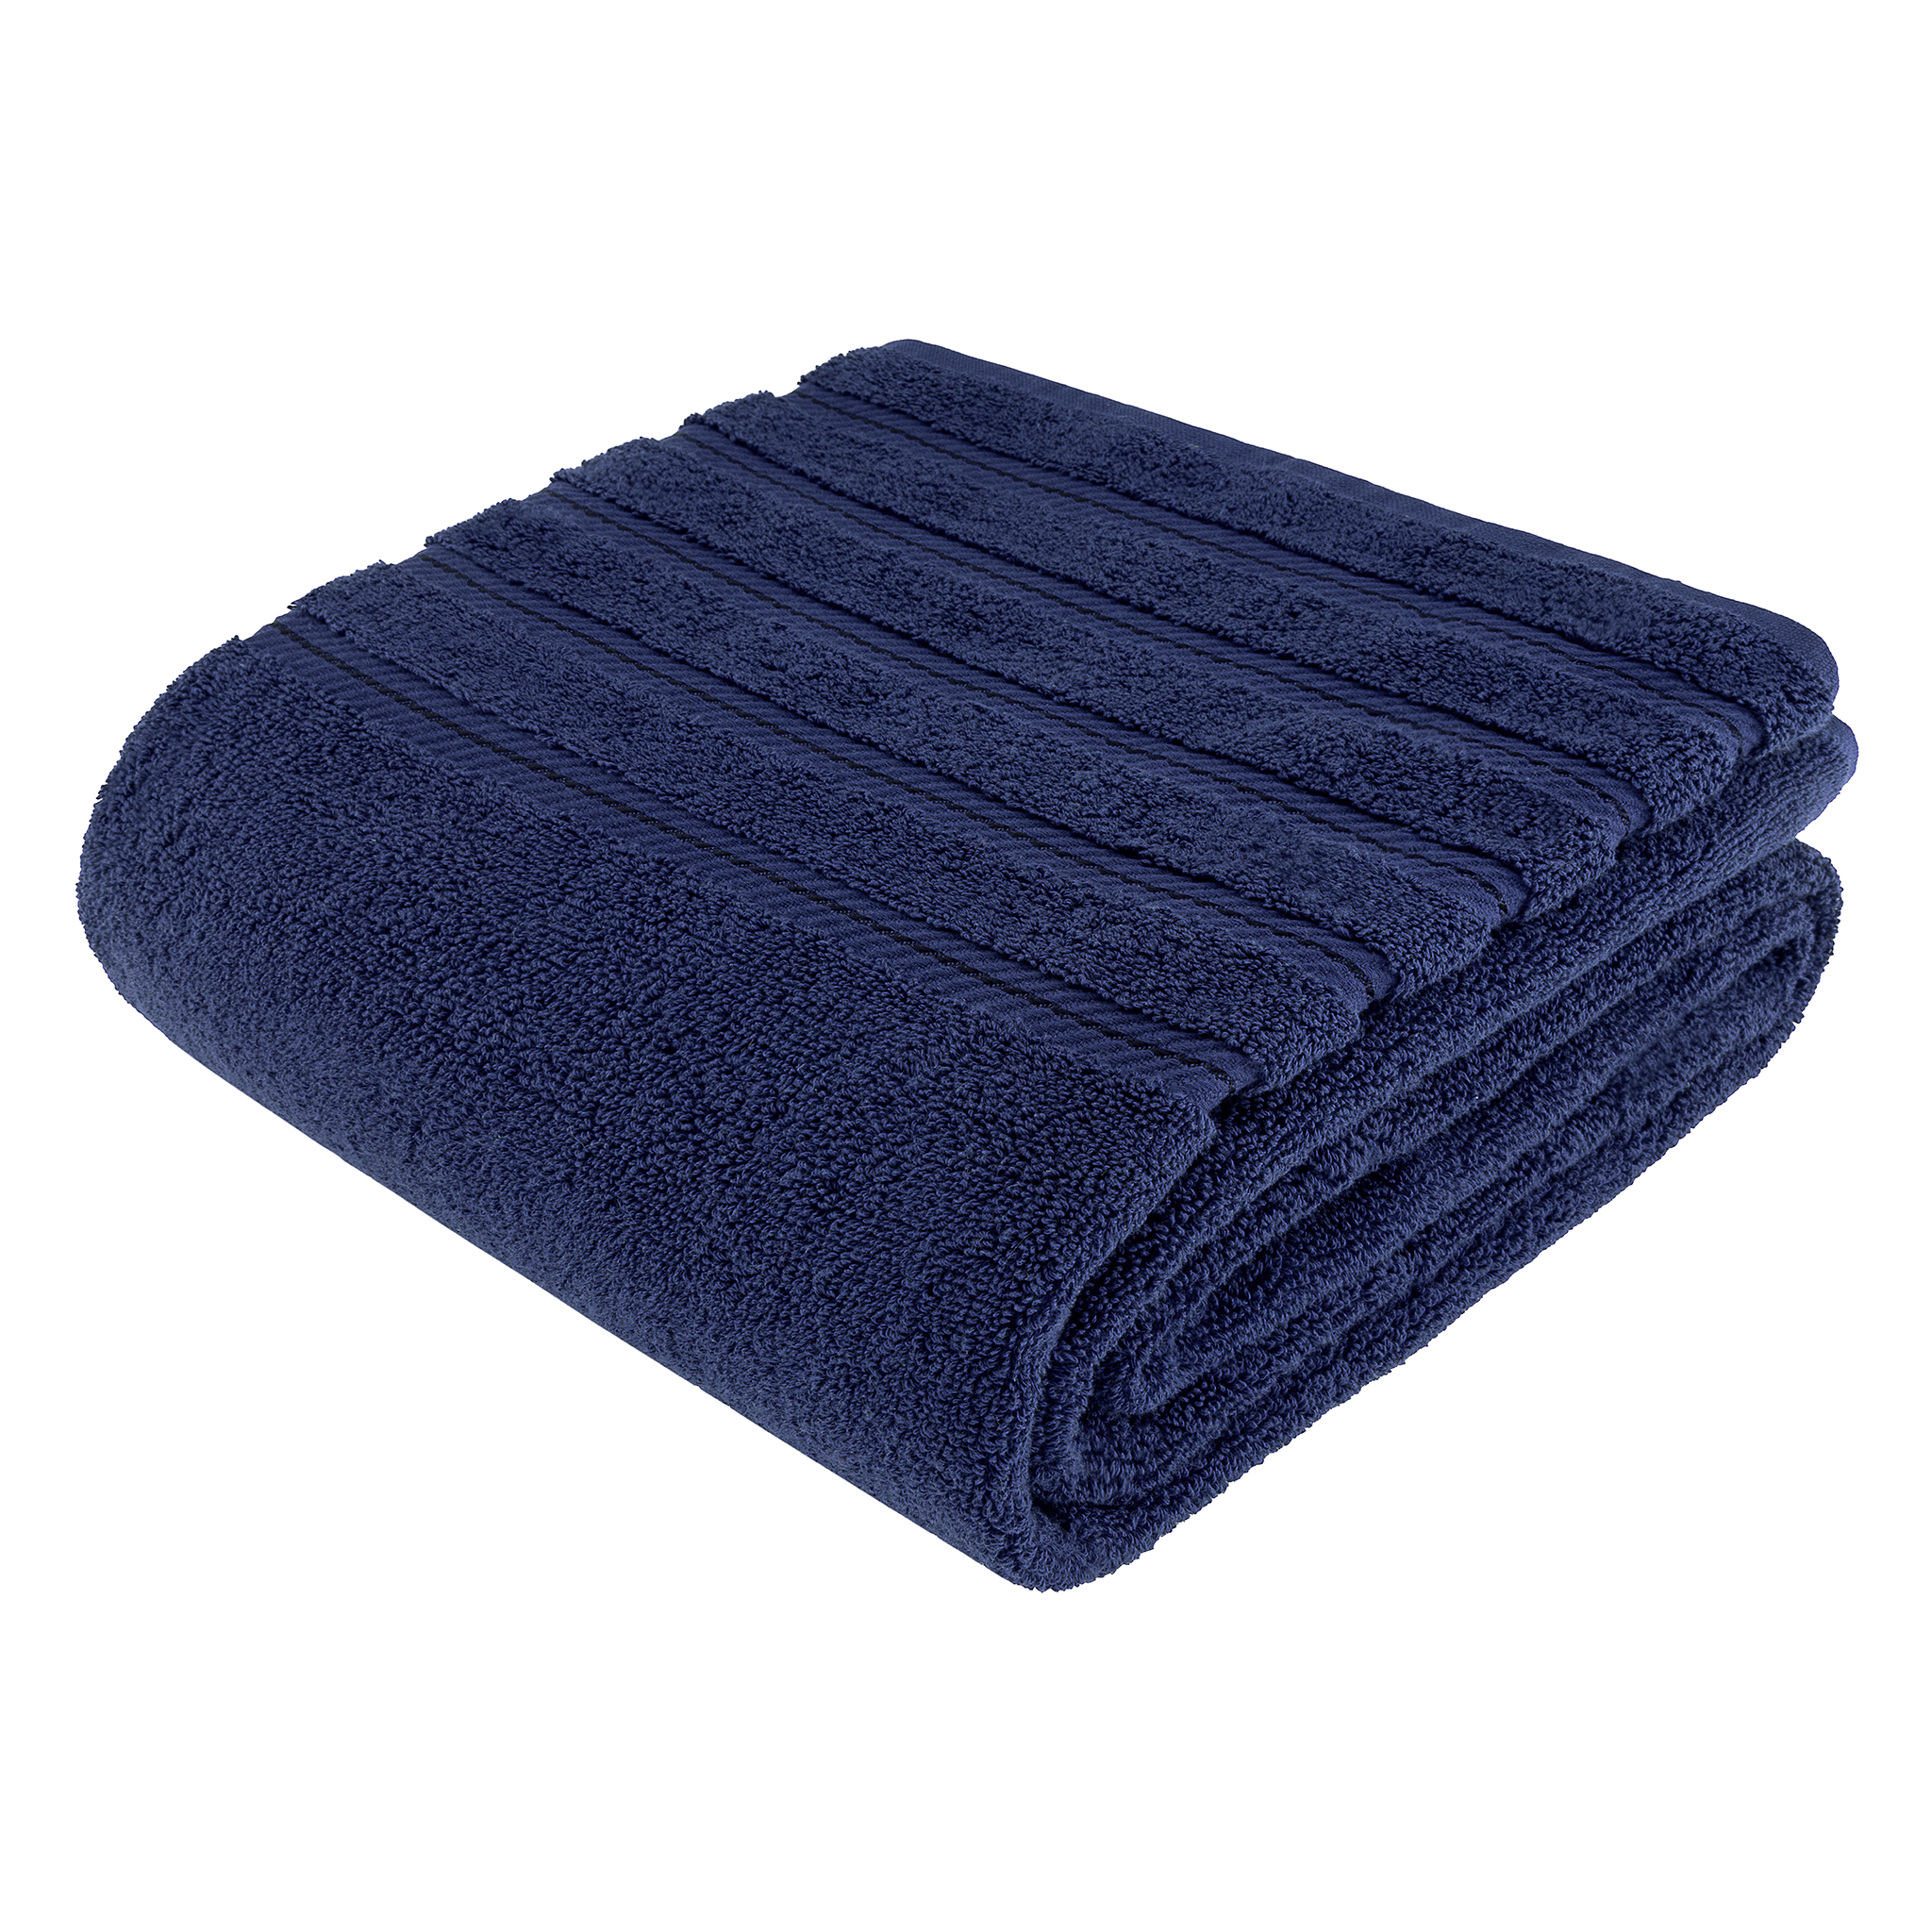 American Soft Linen - 35x70 Jumbo Bath Sheet Turkish Bath Towel - 16 Piece Case Pack - Navy-Blue - 7